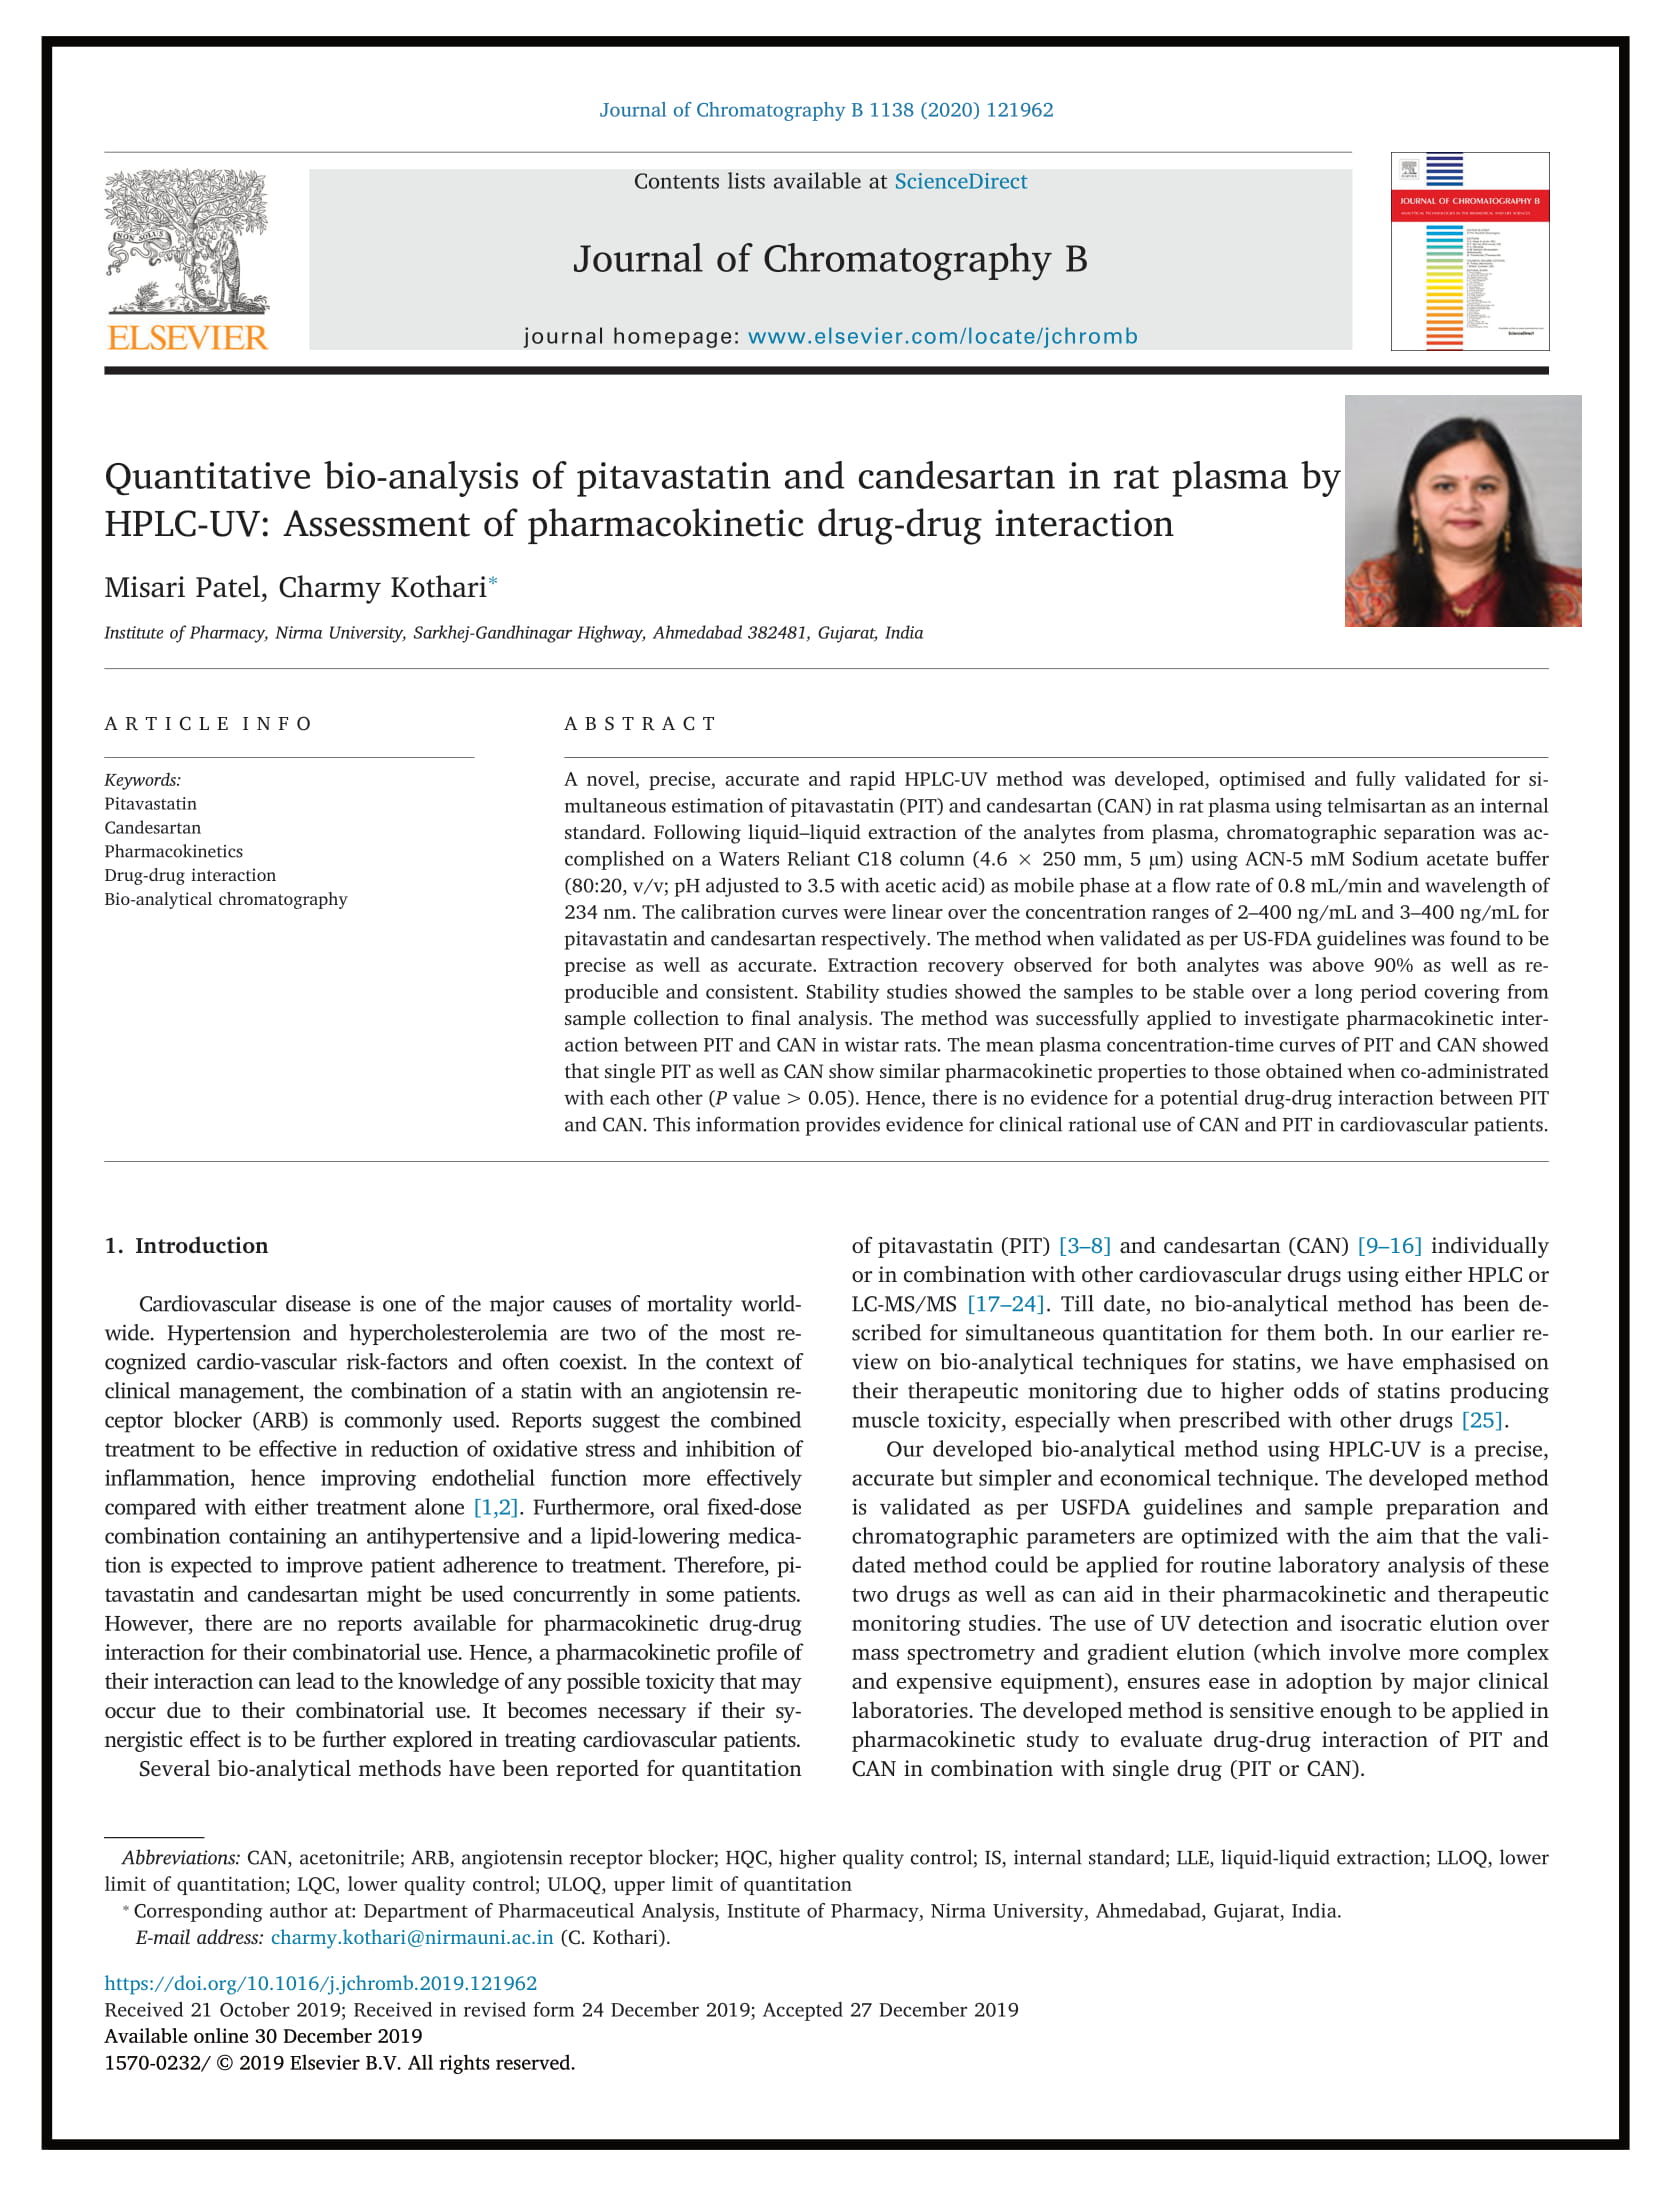 Quantitative bio-analysis of pitavastatin and candesartan in rat plasma by HPLC-UV: Assessment of pharmacokinetic drug-drug interaction